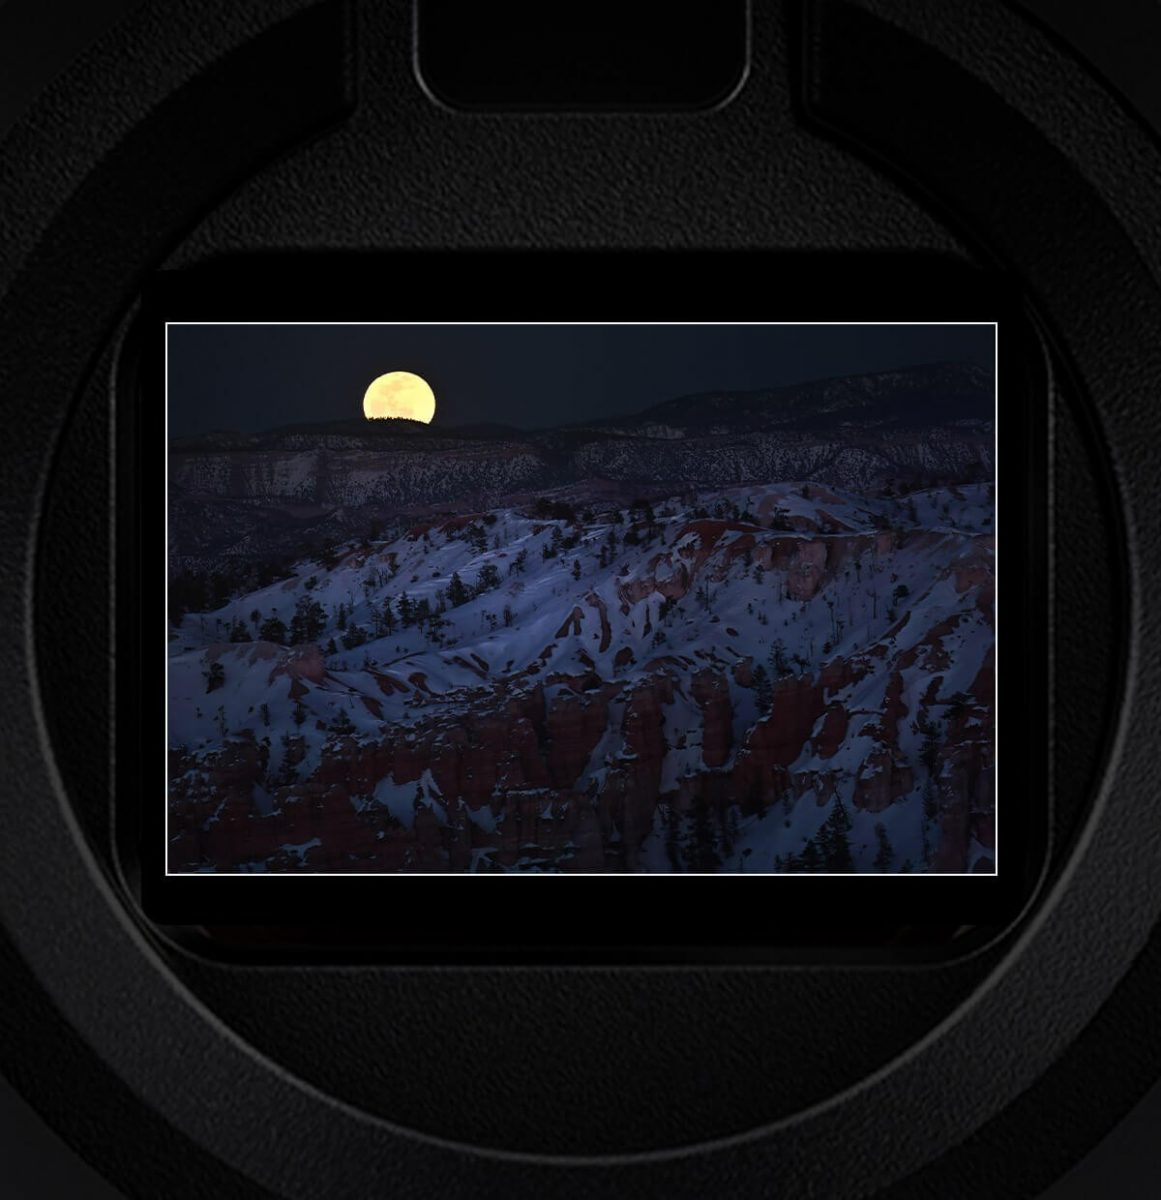 Fotocamera mirrorless Nikon Z8